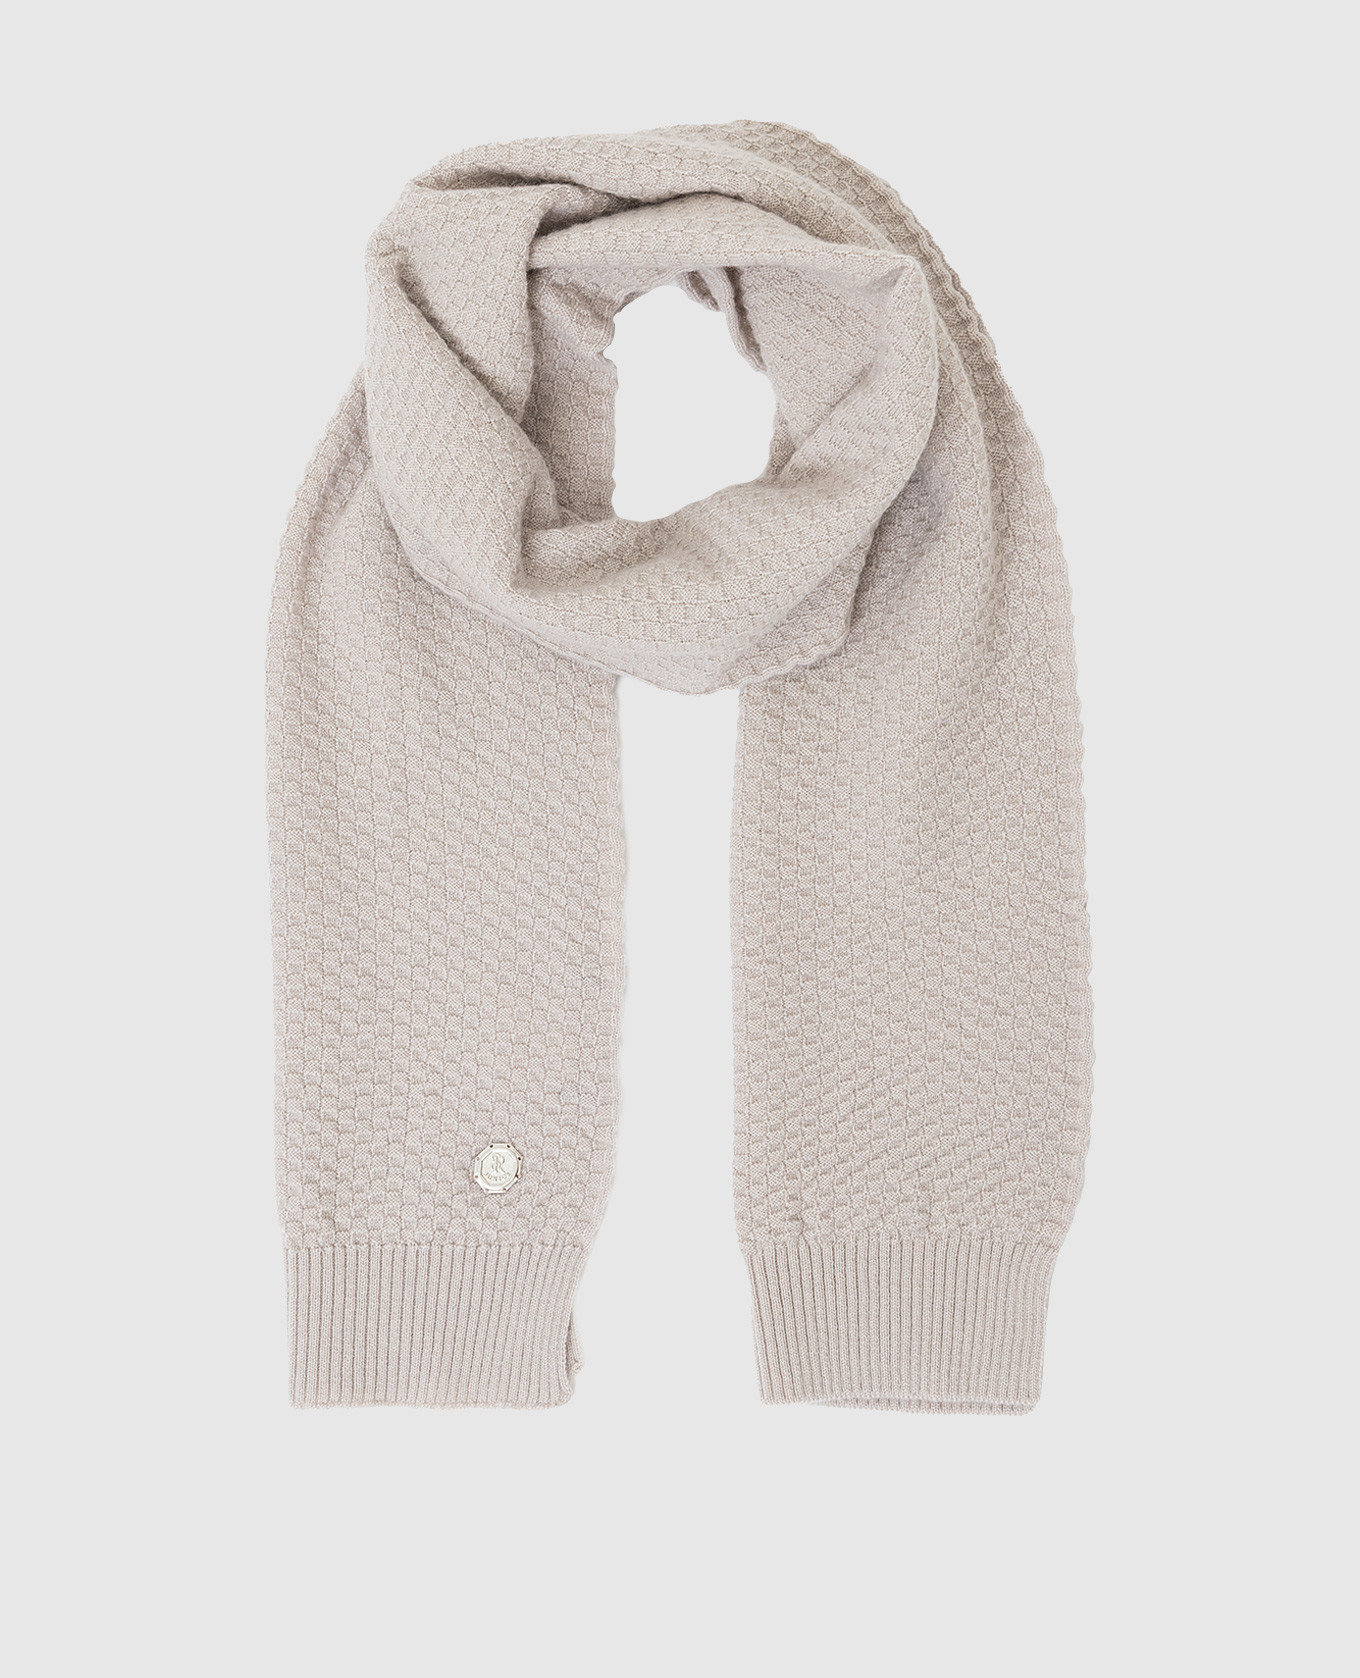 Children's light beige cashmere patterned scarf